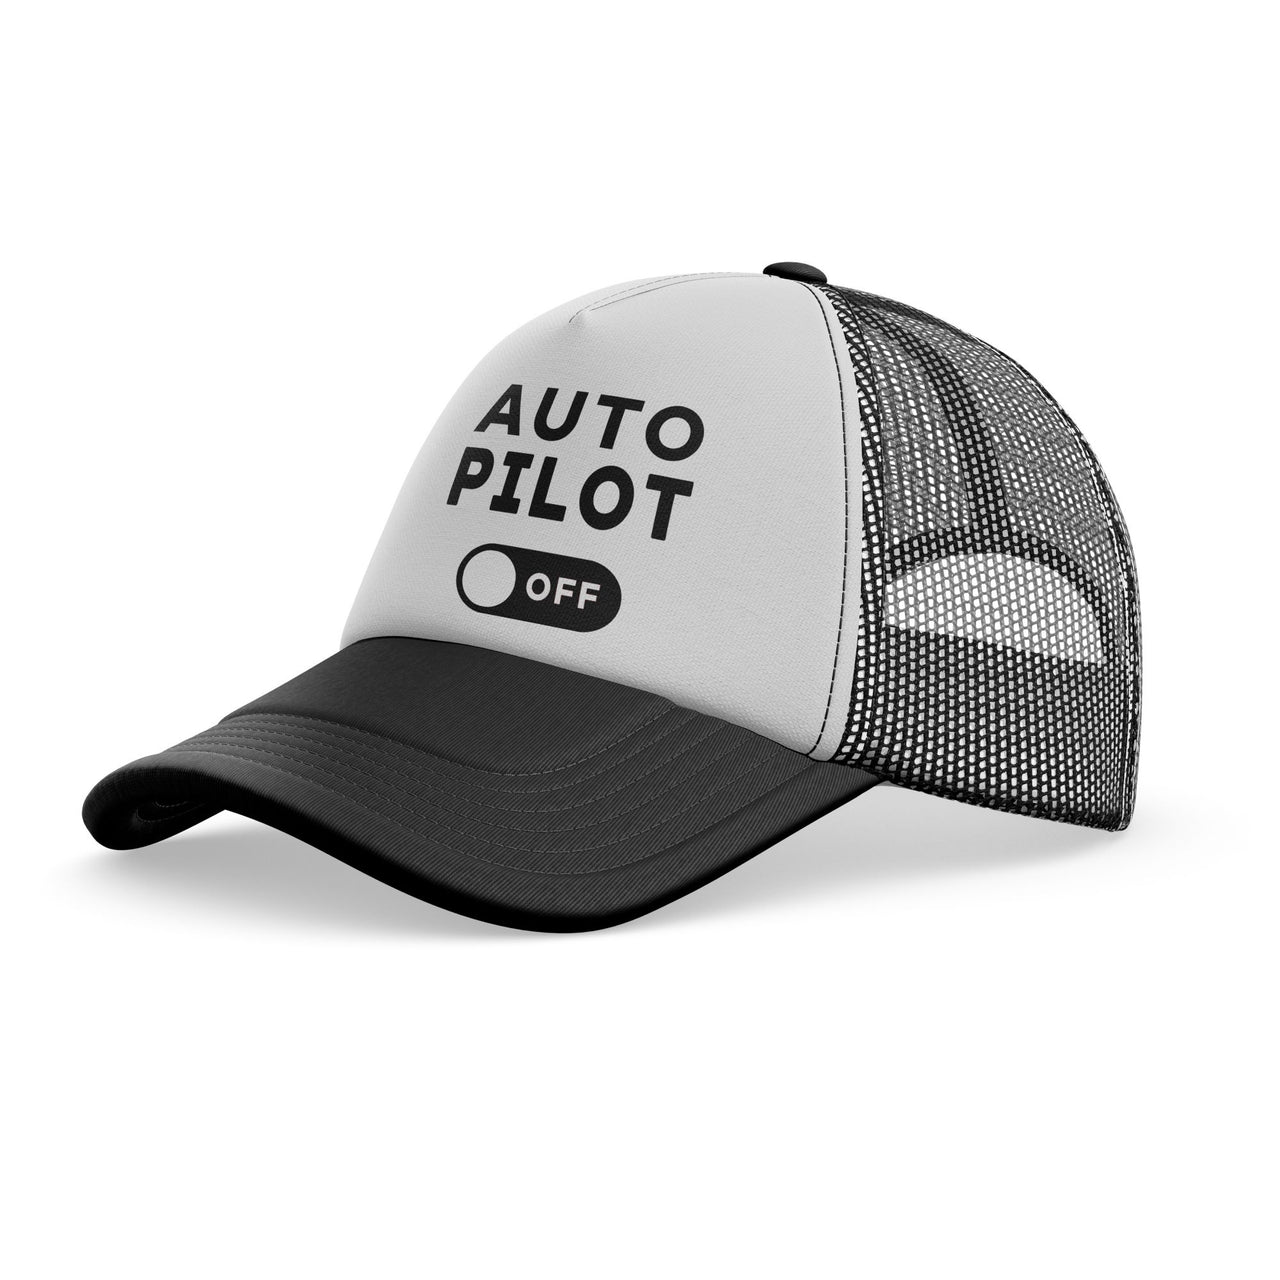 Auto Pilot Off Designed Trucker Caps & Hats